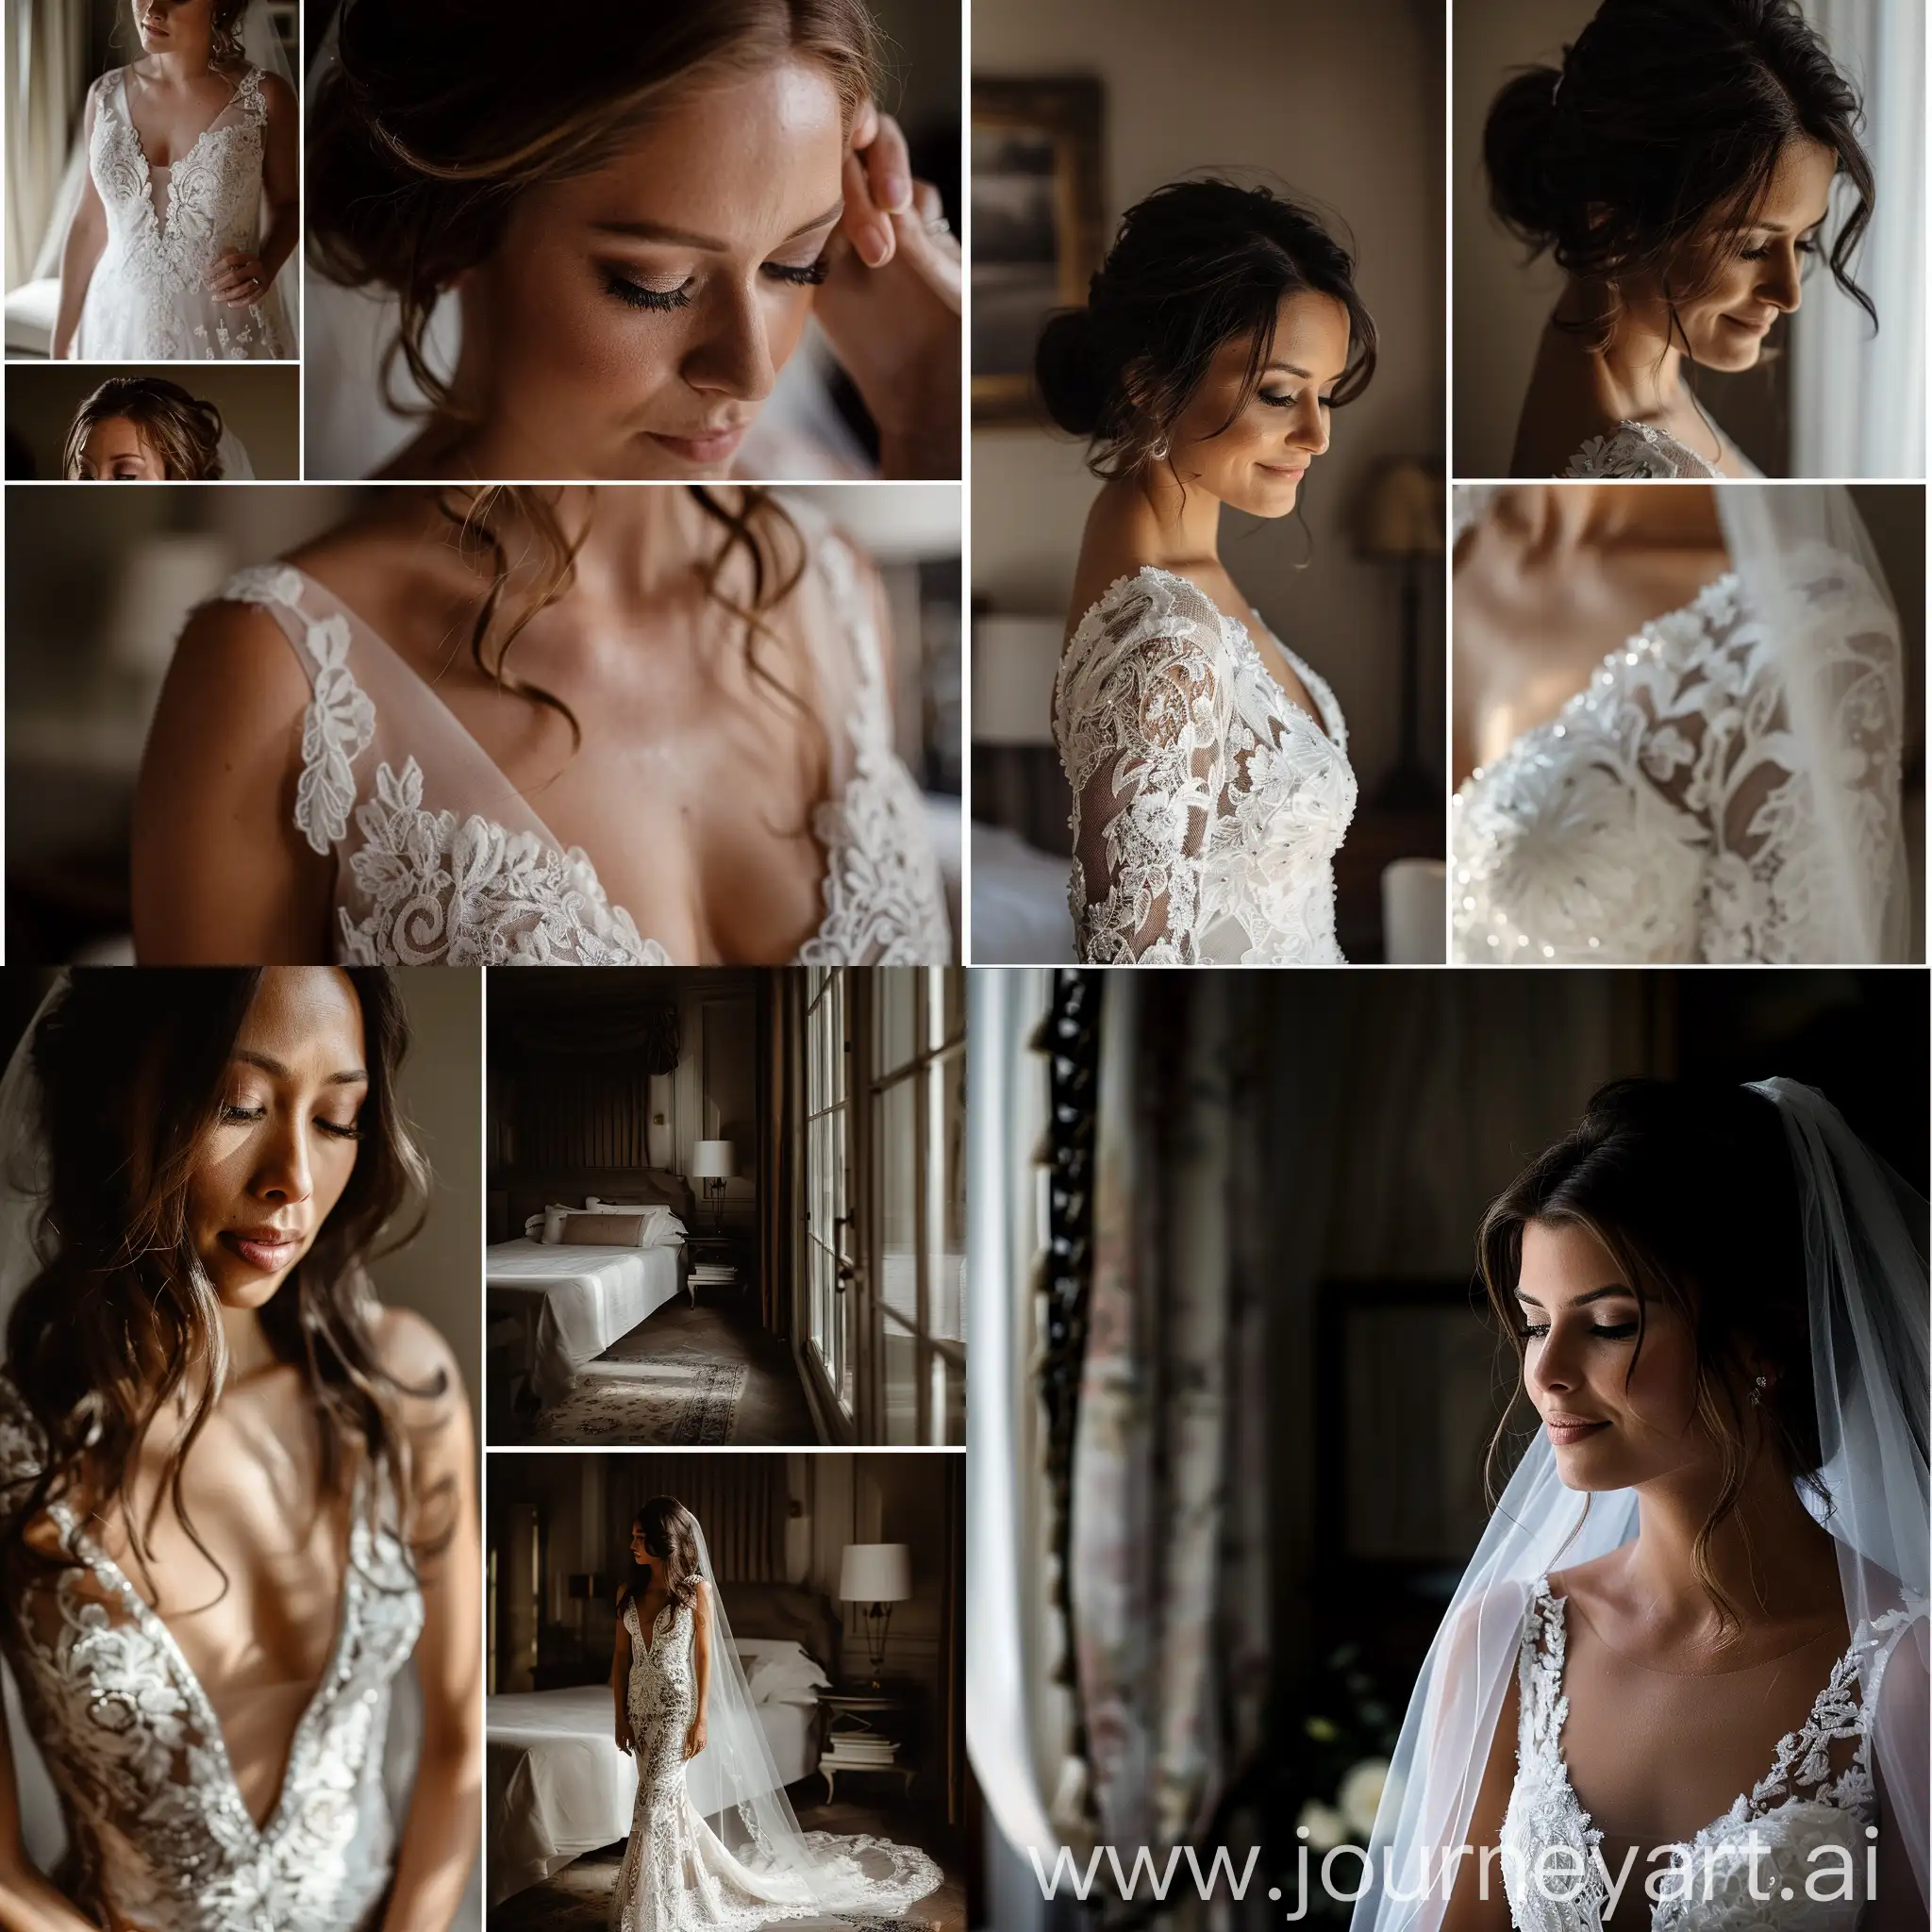 Brides-Morning-Preparations-with-Beautiful-Wedding-Attire